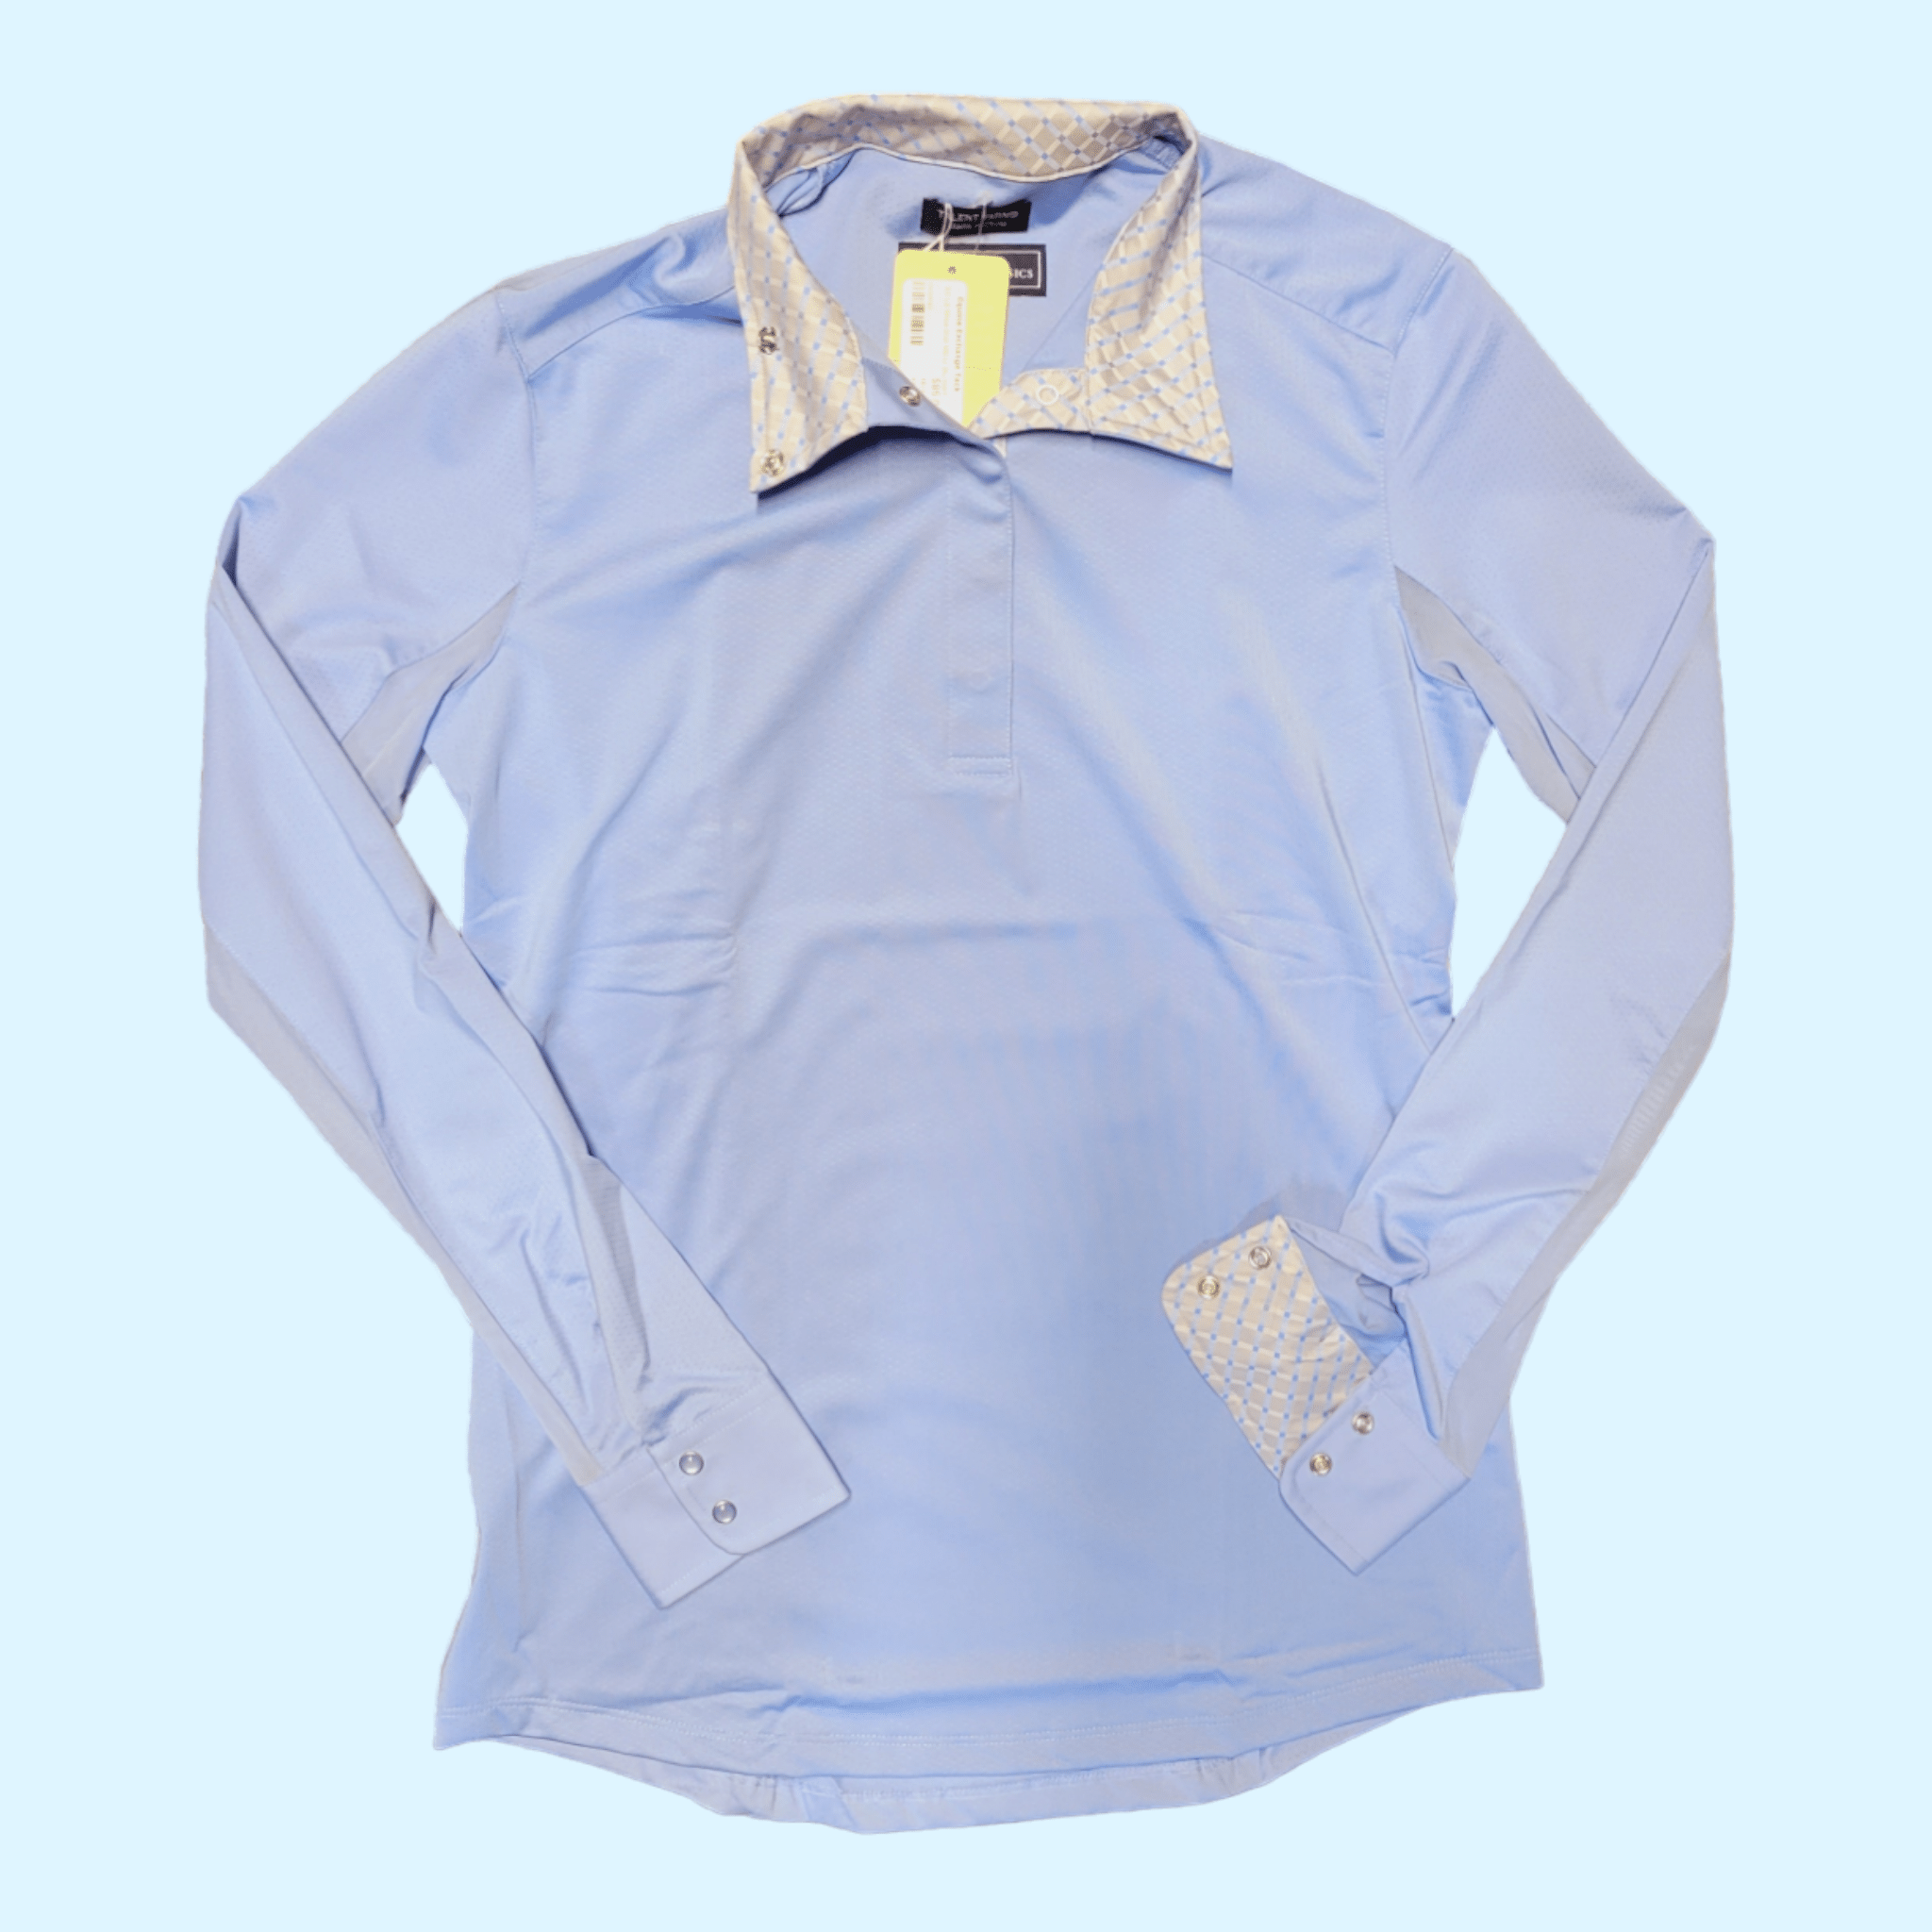 Essex Classics Long Sleeve Show Shirt in Blue - Medium